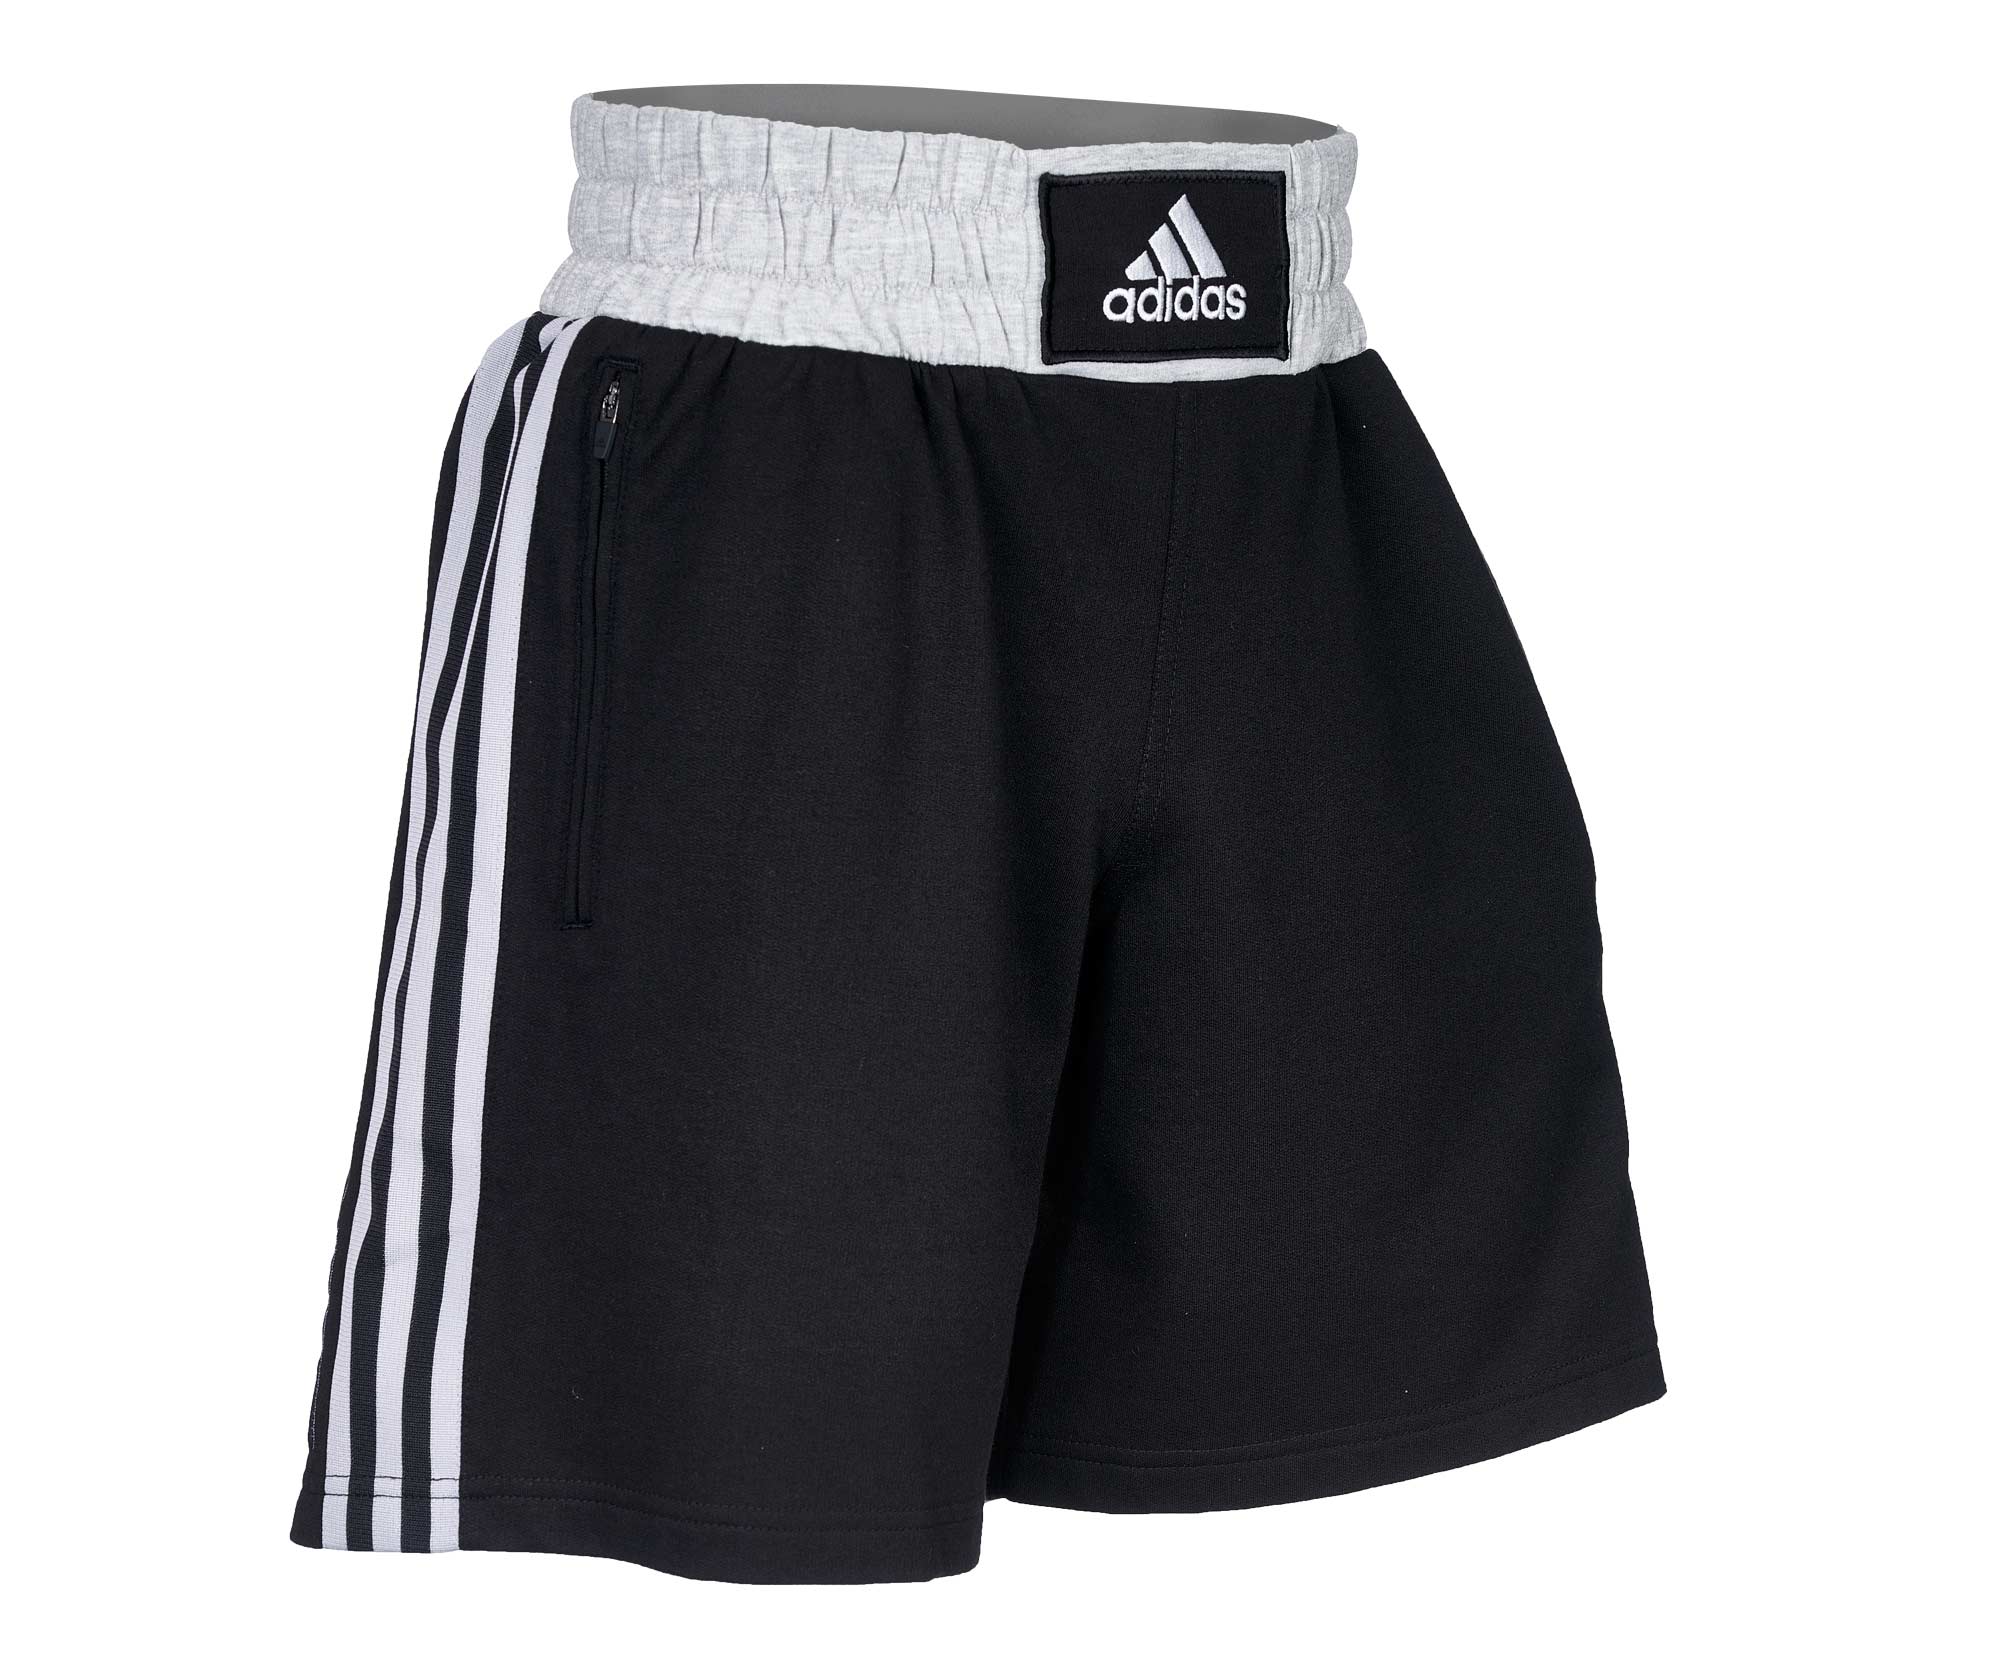 adidas Boxing Wear Classic Shorts, BXWSH01